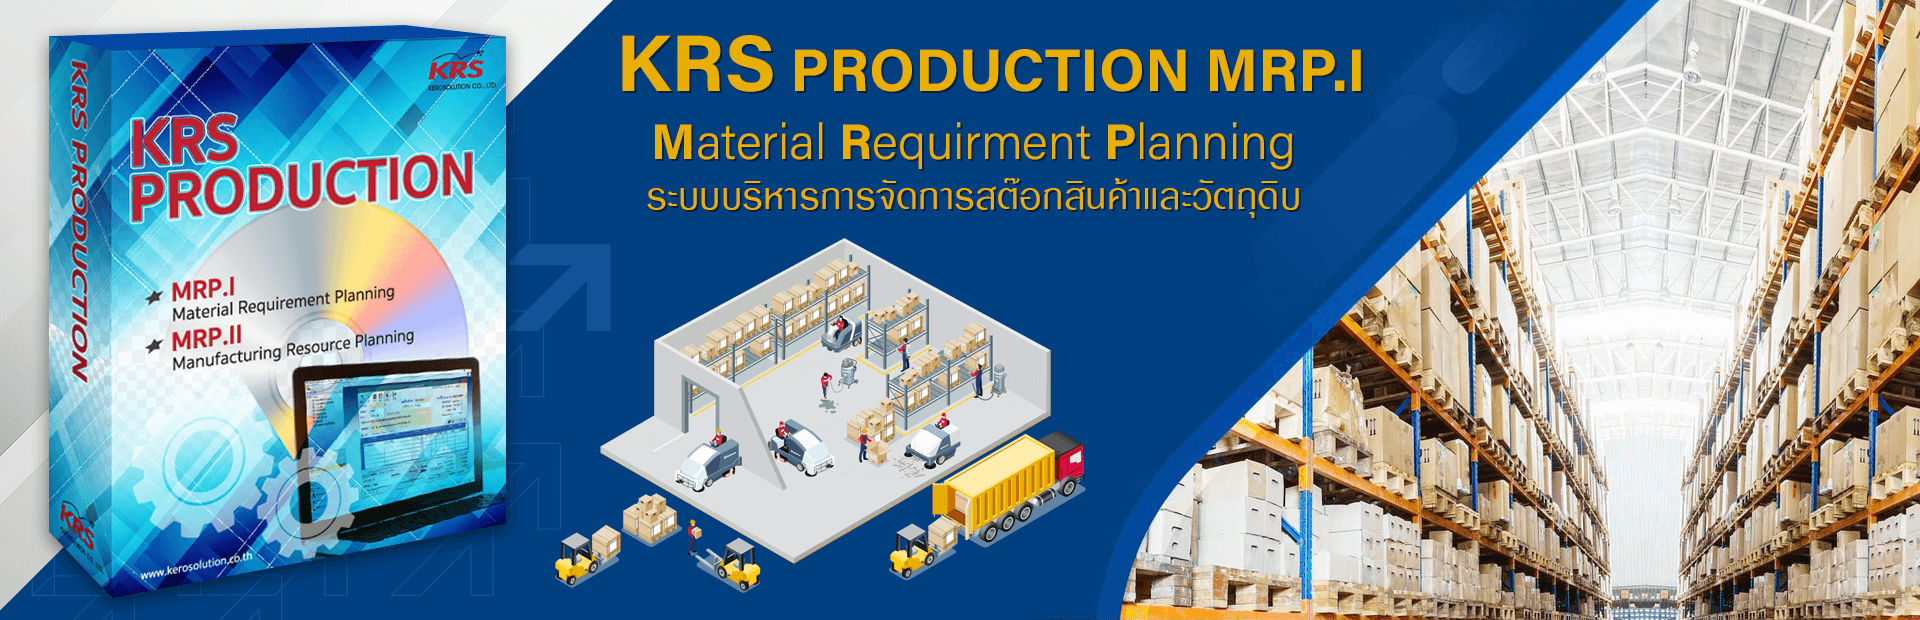 KRS PRODUCTION MRP.I